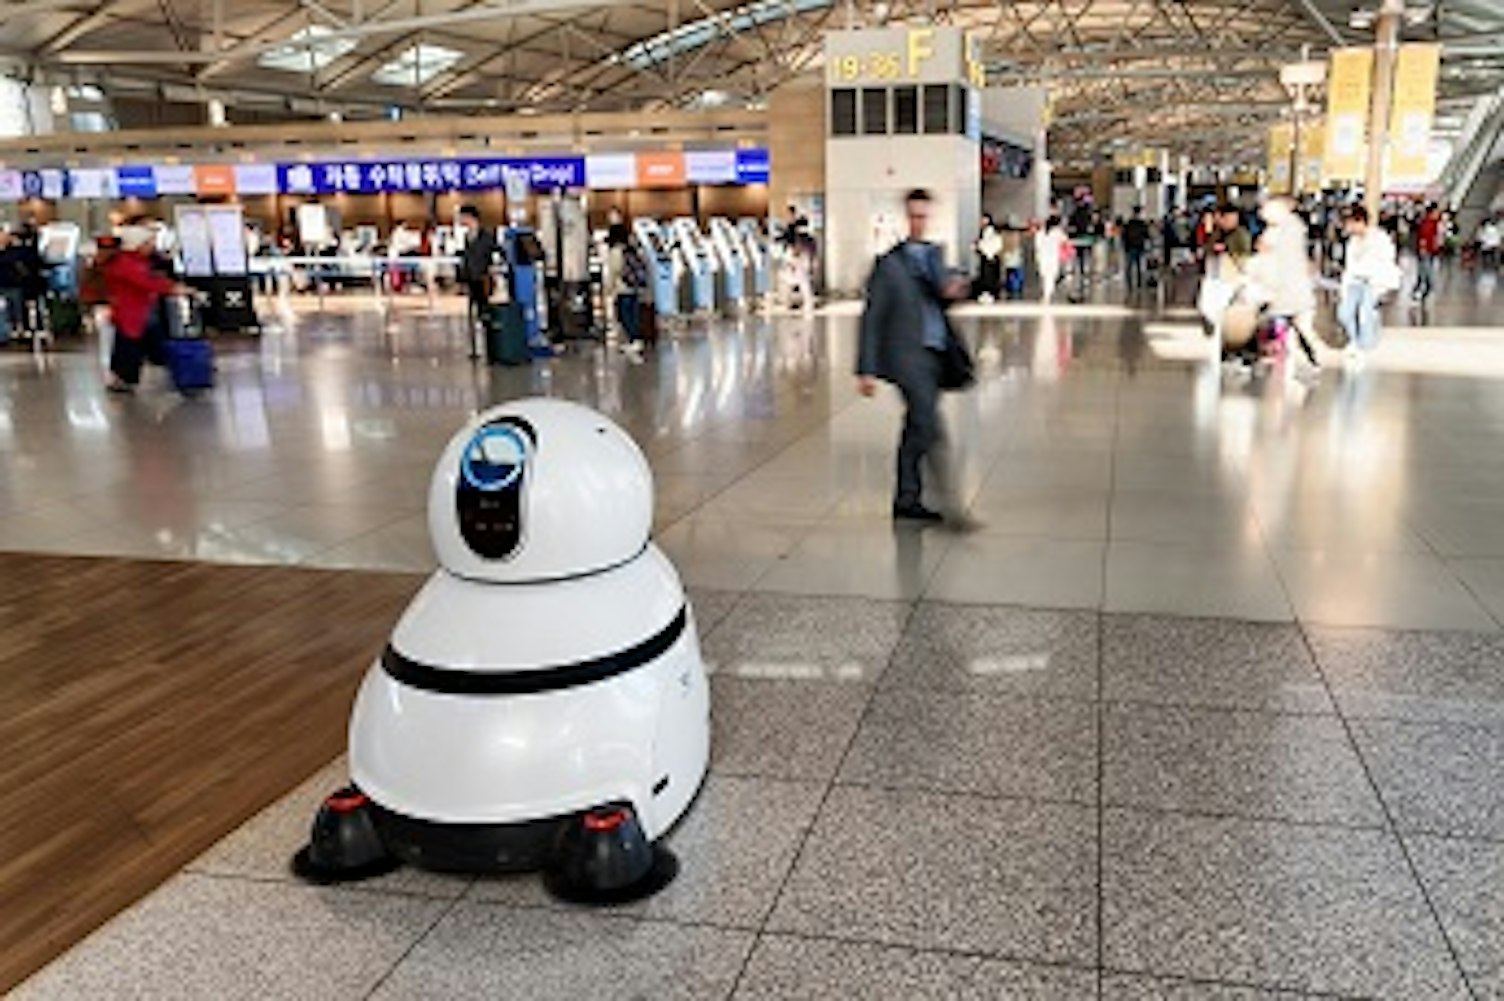 orig disinfecting robot in airport